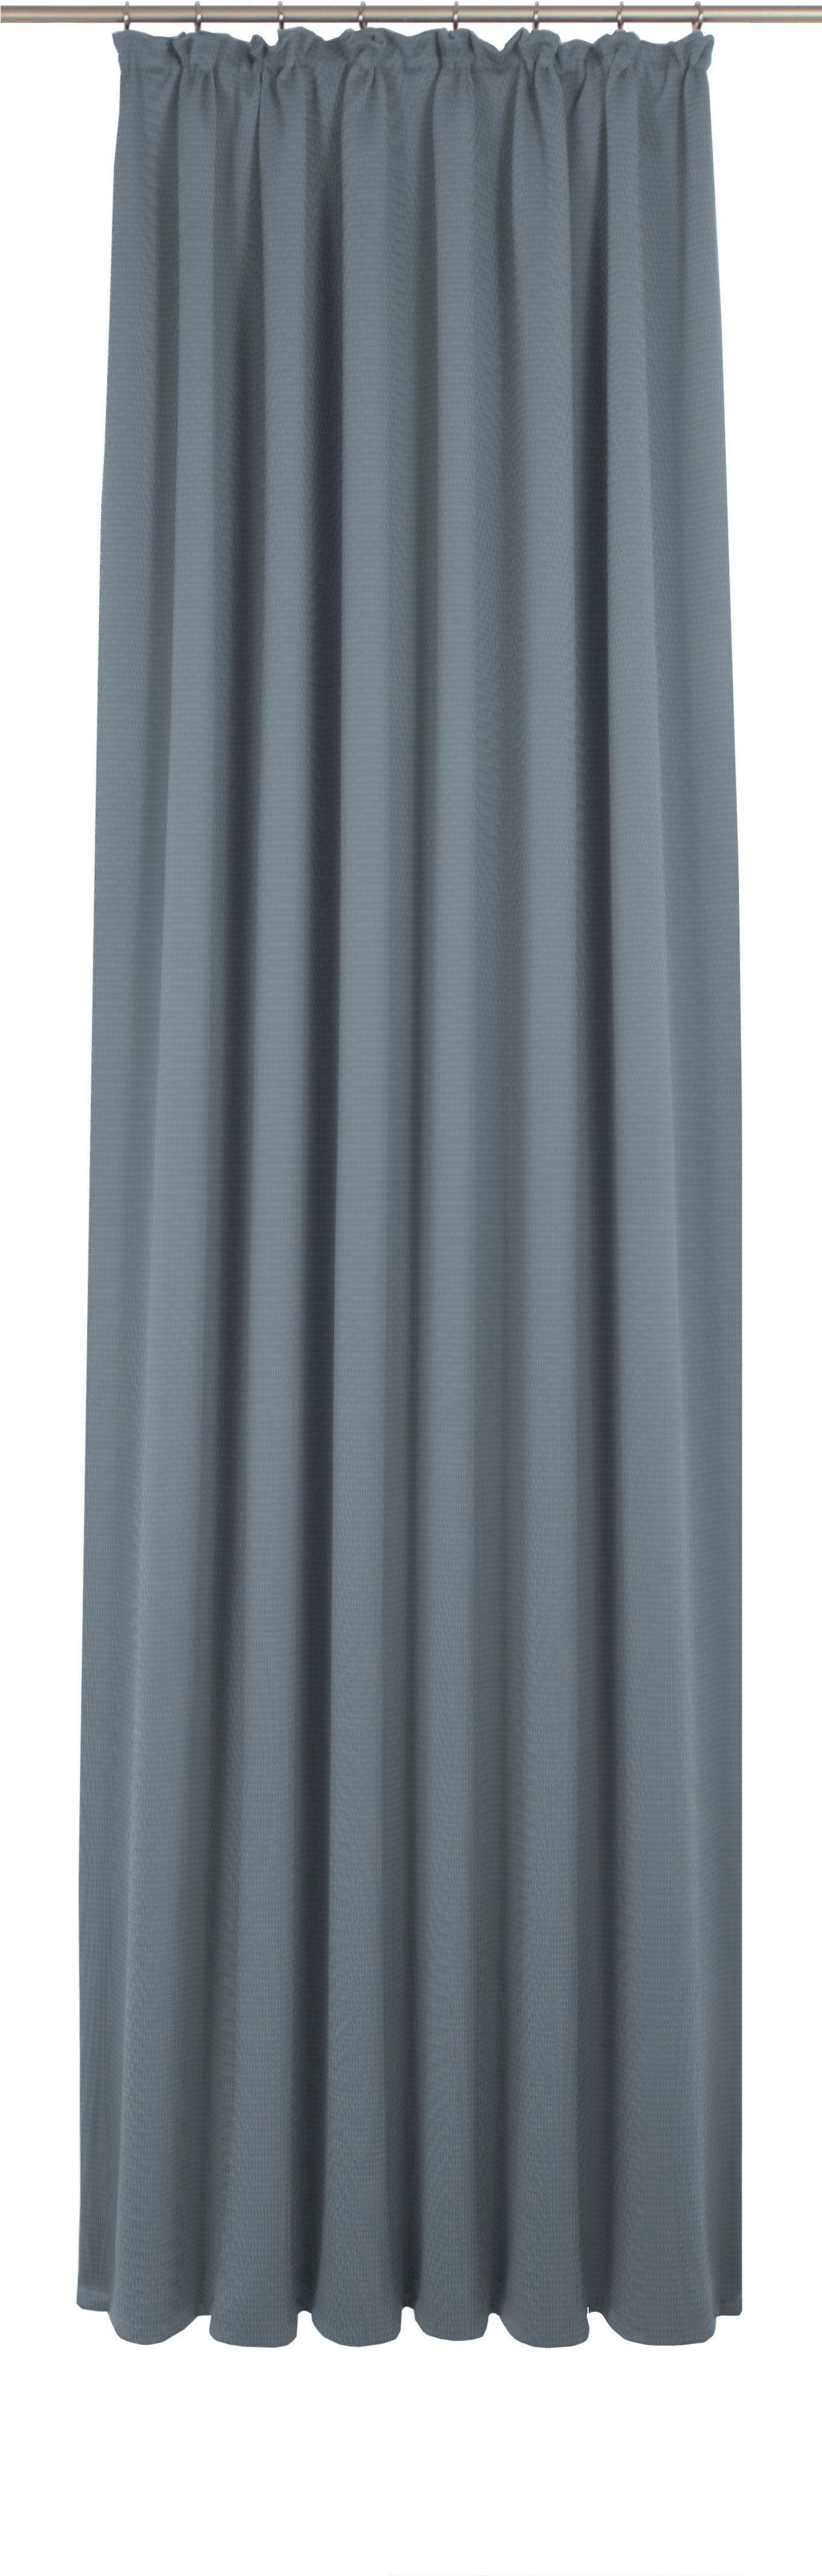 Vorhang Uni Collection light, Wirth, Kräuselband (1 St), blickdicht, nach Maß königsblau | Fertiggardinen